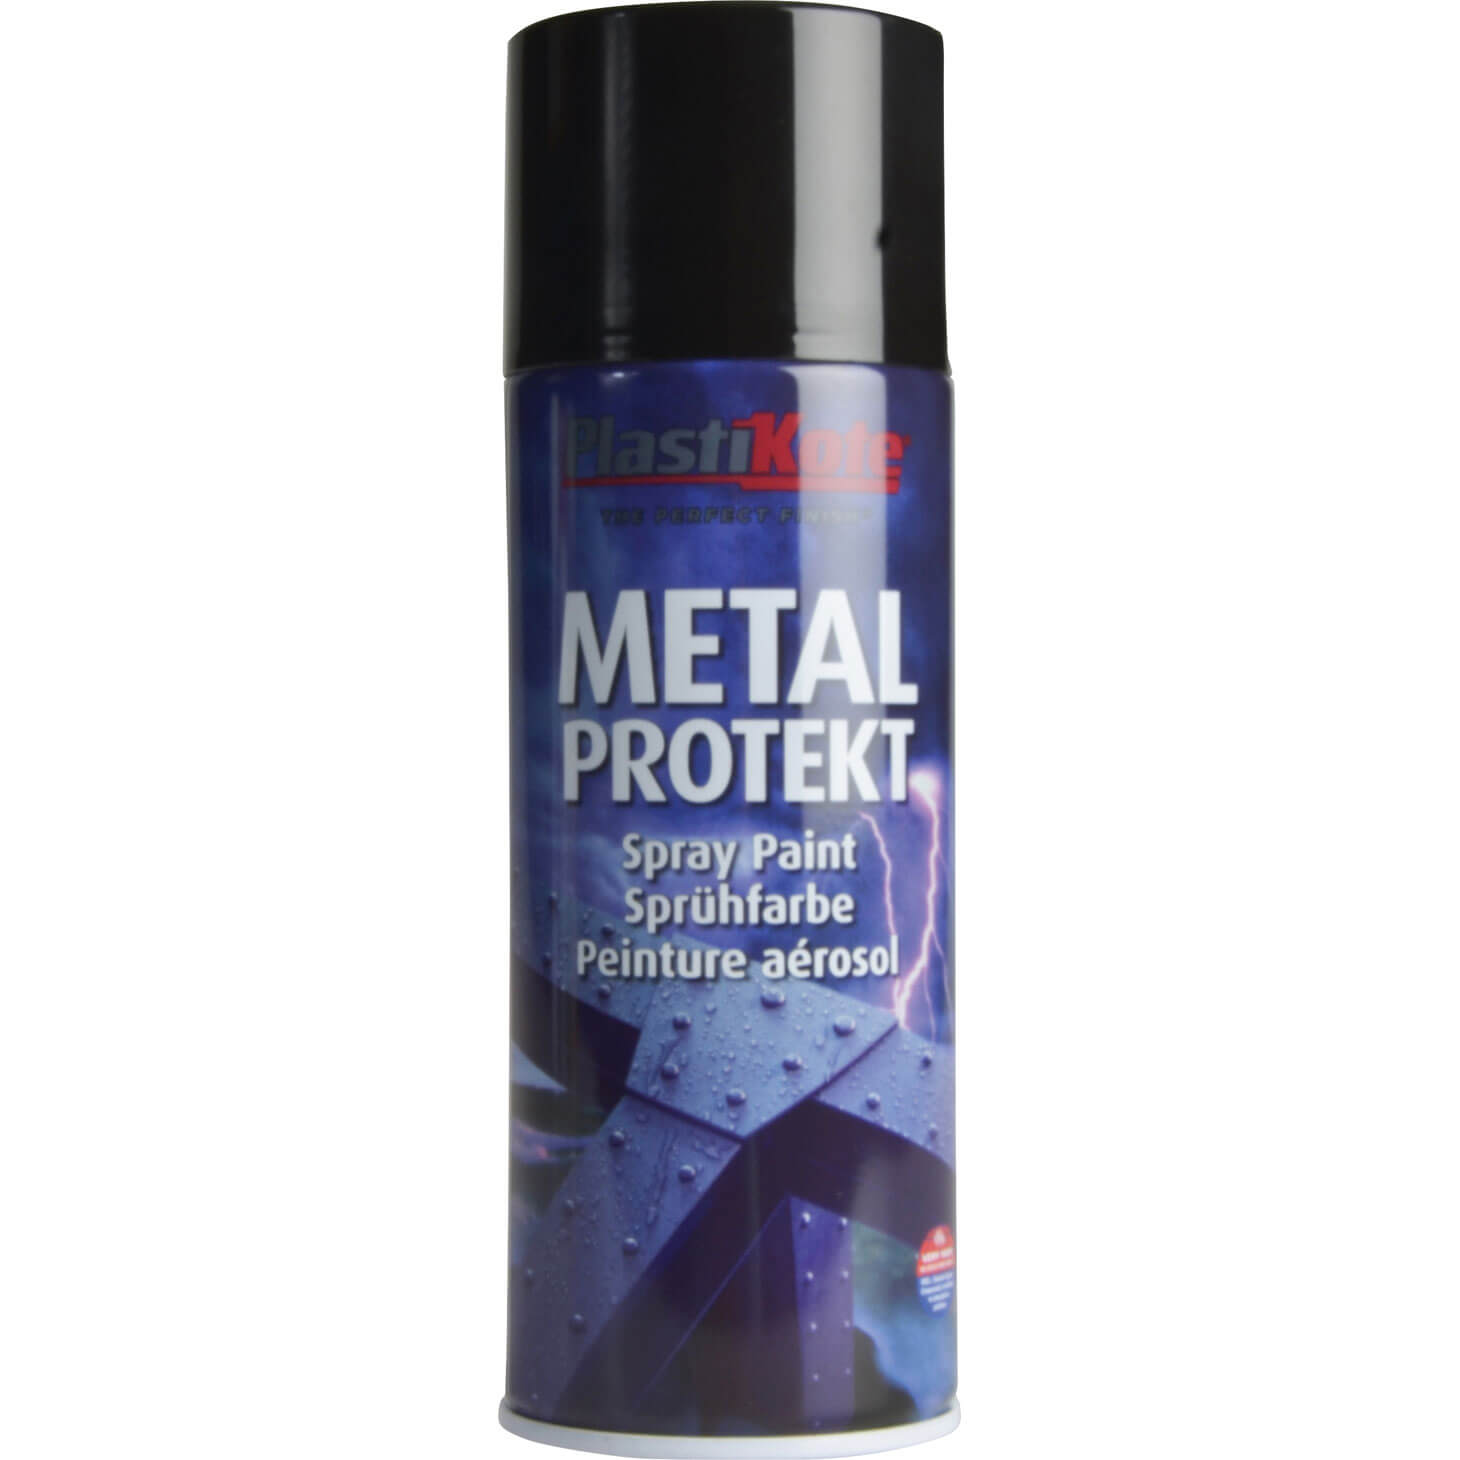 Image of Plastikote Metal Protekt Aerosol Spray Paint Gloss Black 400ml